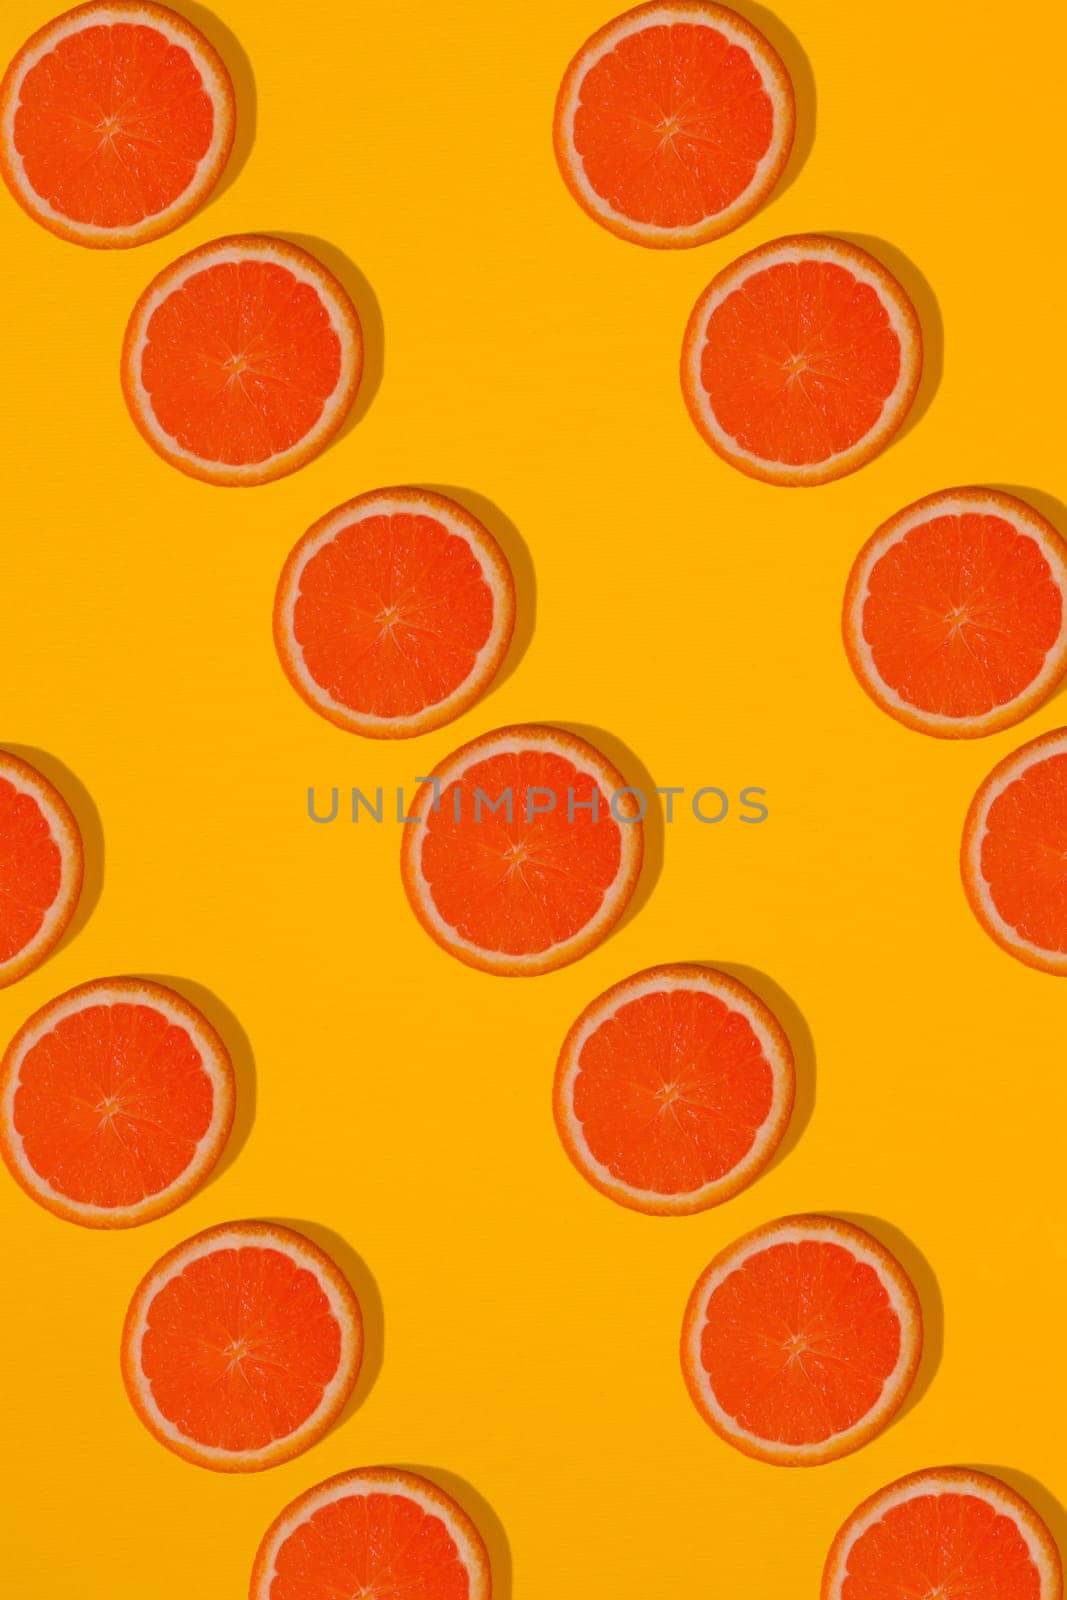 Grapefruit pattern on yellow background. Minimal flat lay concept. Print